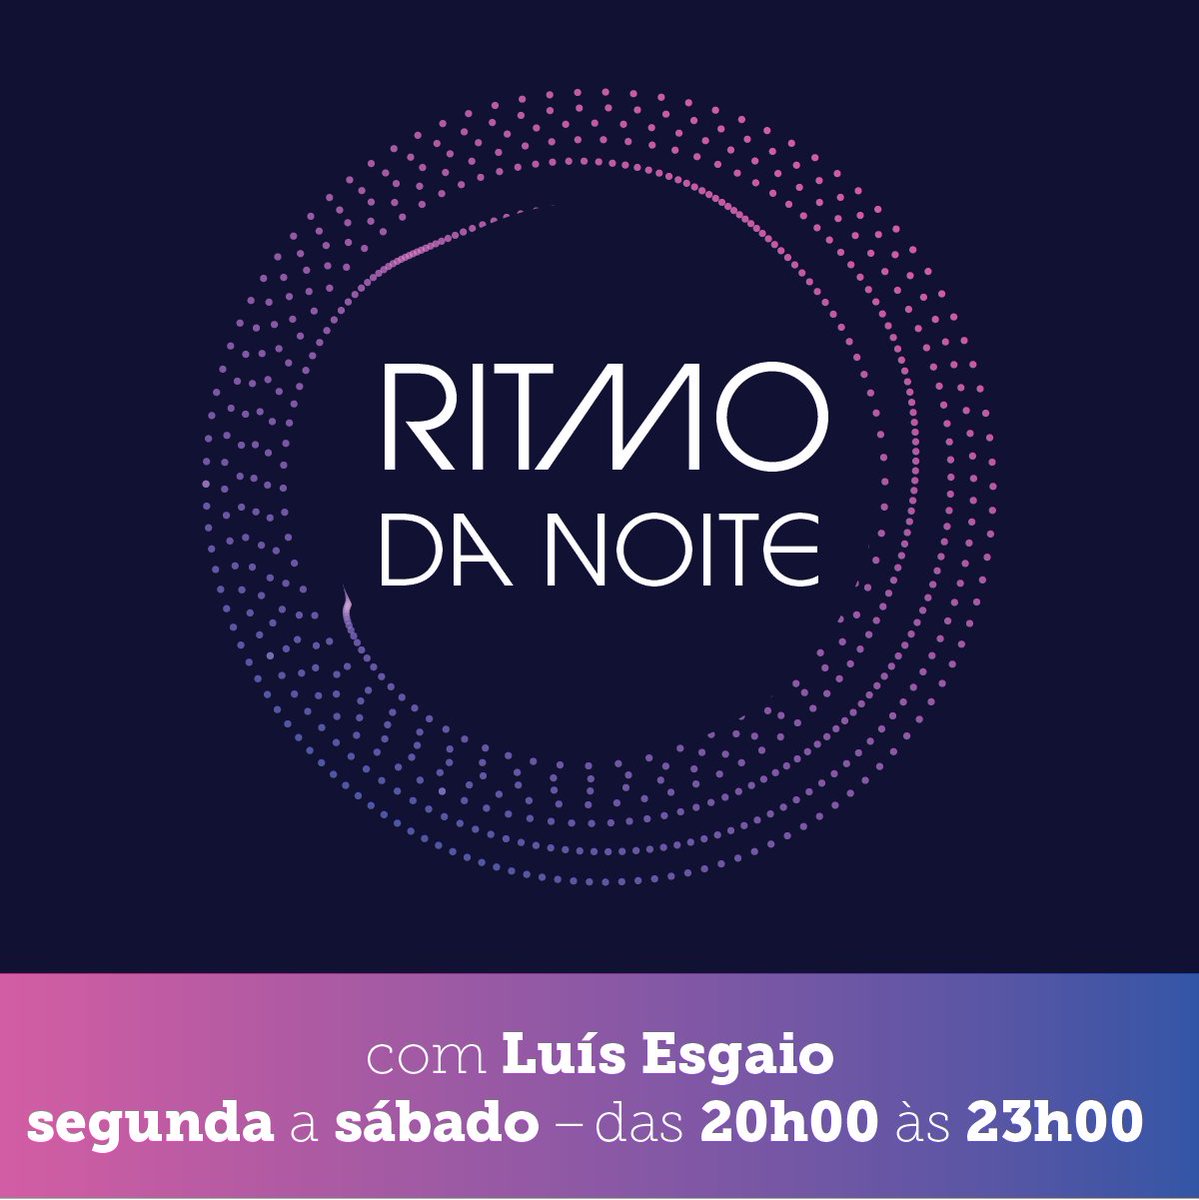 NEW HOST & SHOW ANNOUNCEMENT 💥

Ritmo da Noite starts tonight with Luis Esgaio #LIVE Monday-Friday from 8-11pm on Camões Radio! 🎙

Tune in...

𝙭 camoesradio.com
𝙭 GotTheApp?

#camoesradio #ritmodanoite #camoeslive #newshow #radioprogram #portugueseradio #gottheapp